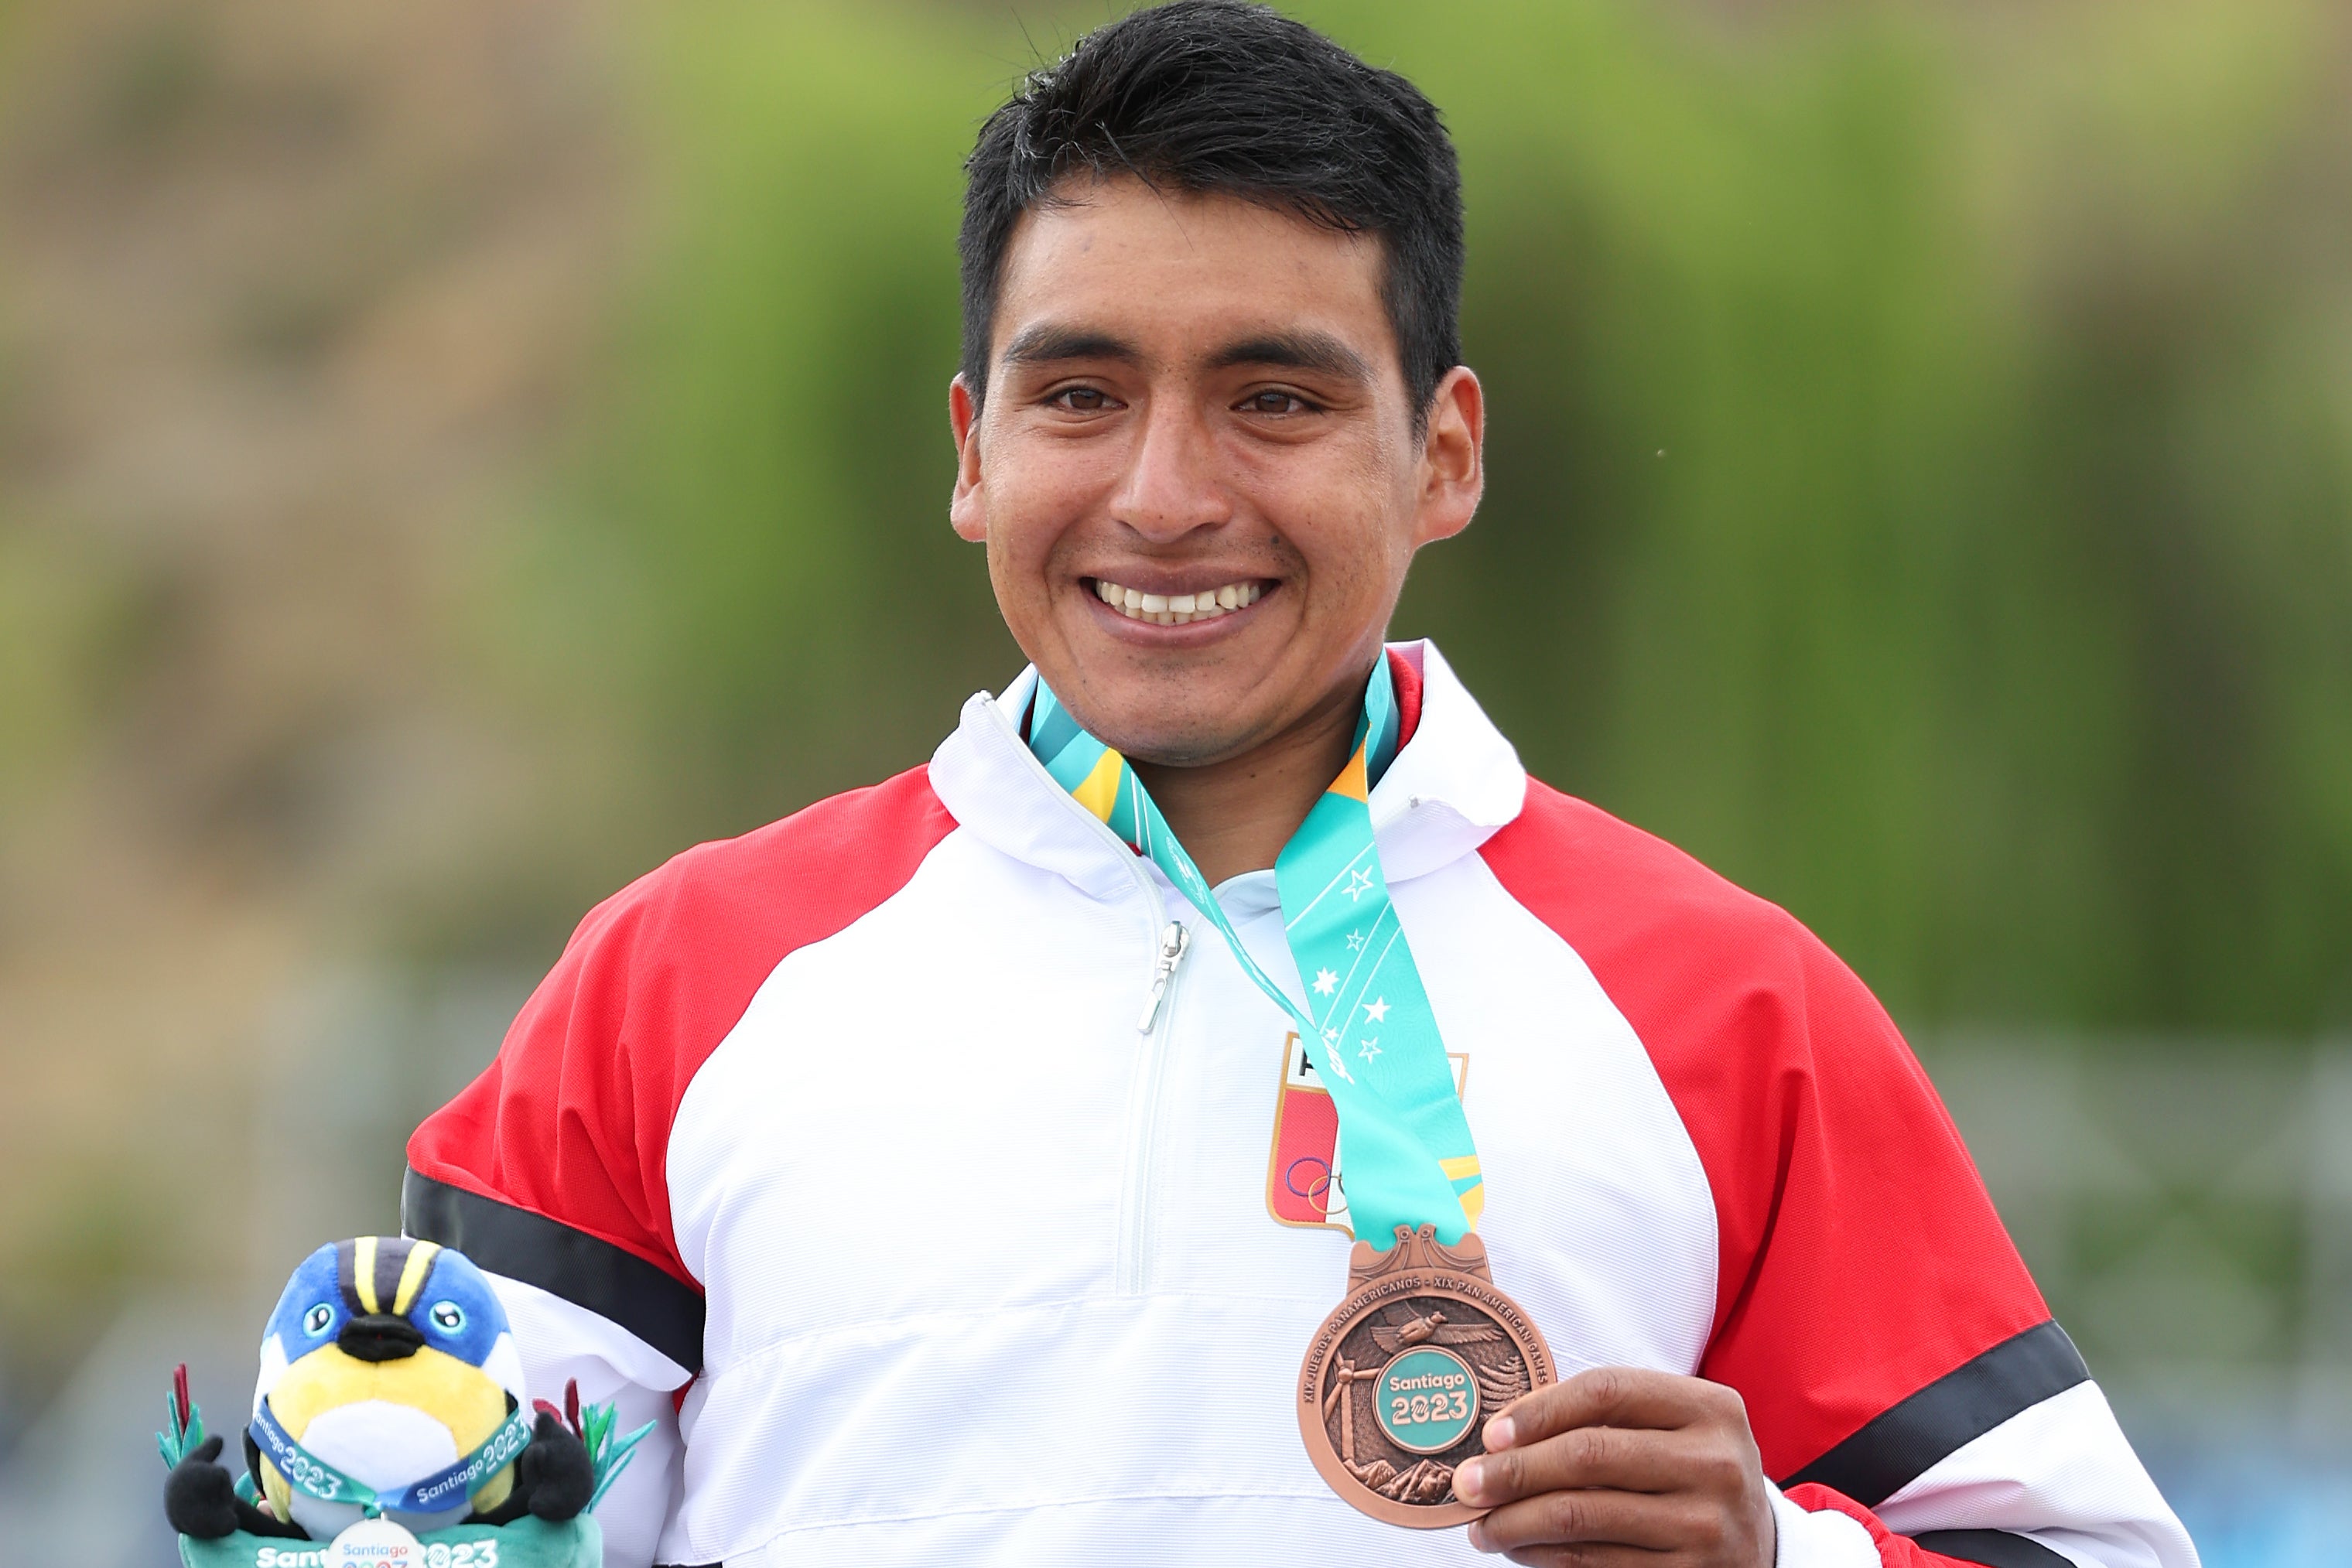 Eriberto Gutierrez won bronze at the Pan Am Games in Santiago last month